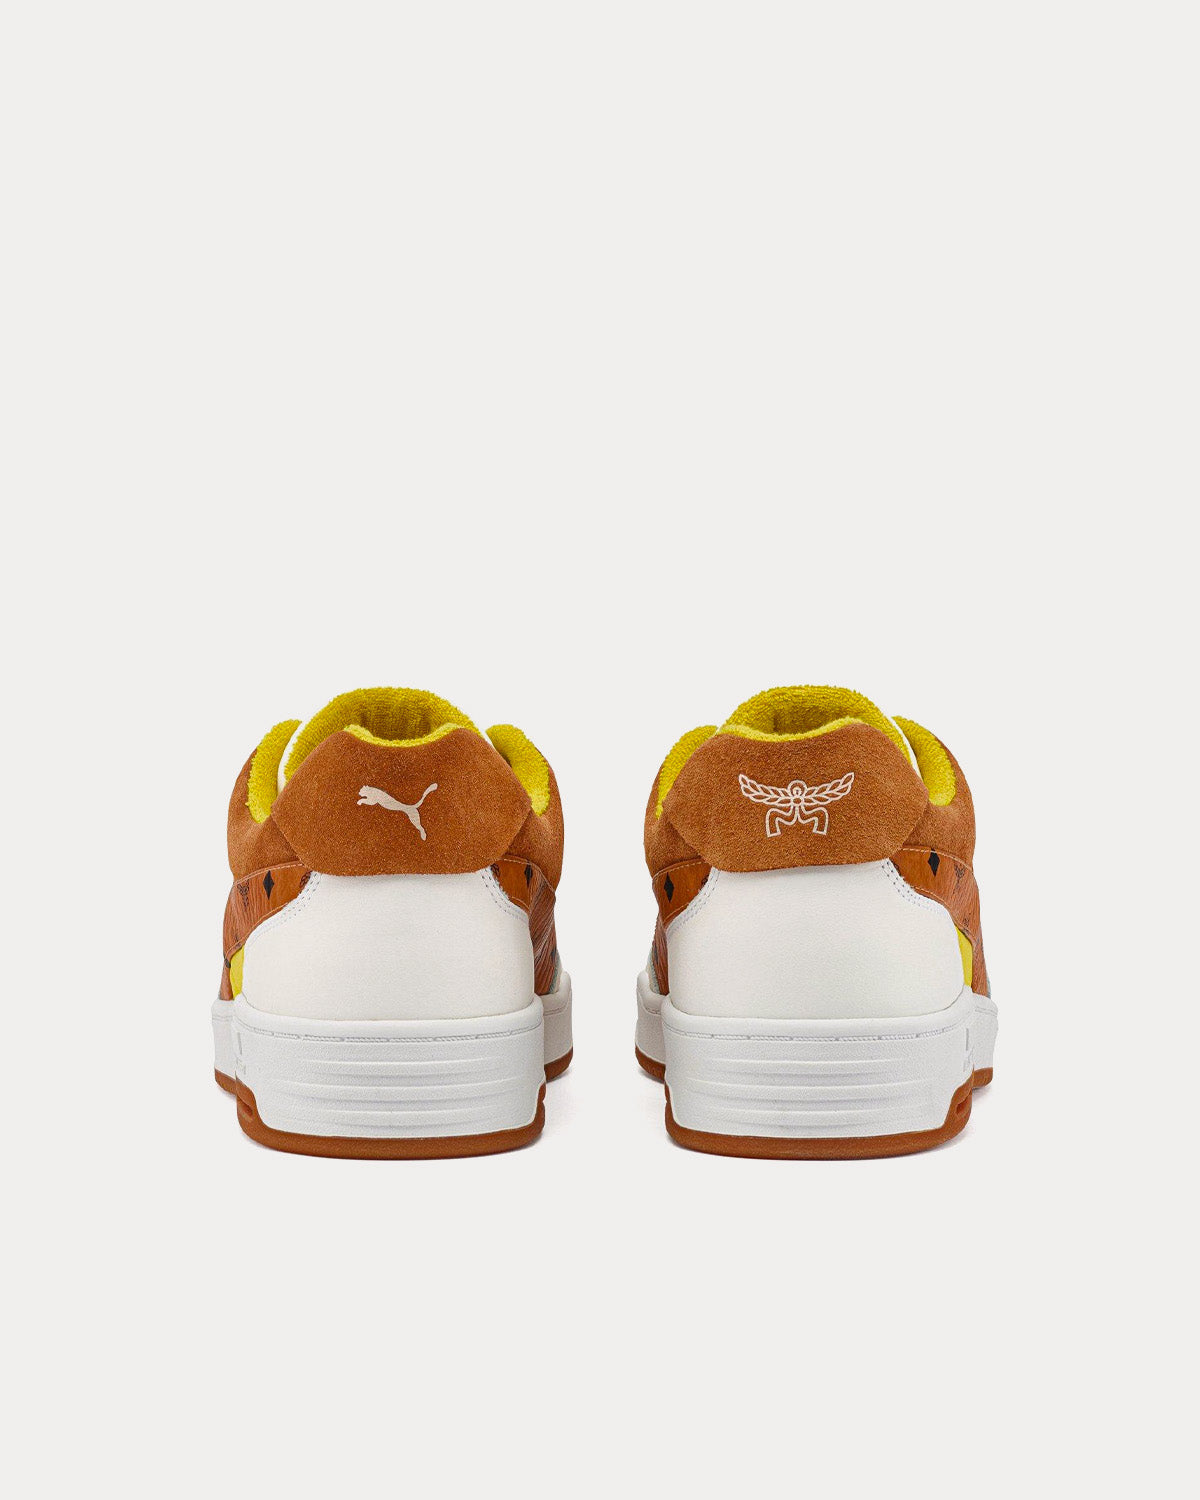 Puma - x MCM Slipstream Yellow / Bright White / Vibrant Yellow Low Top Sneakers